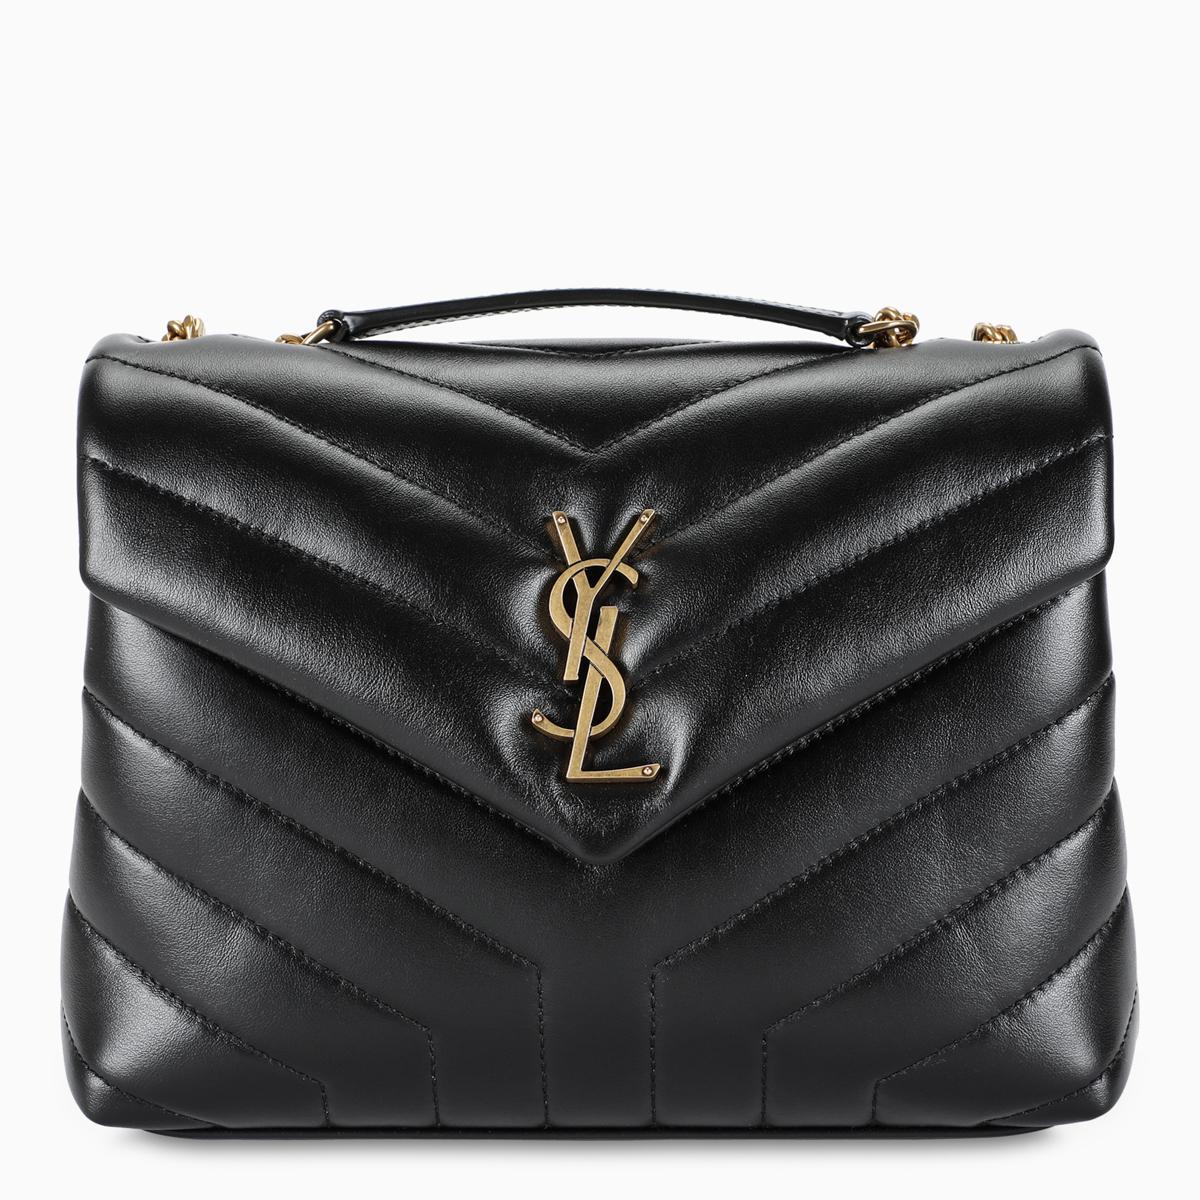 Saint Laurent Black/gold Small Ysl Loulou Bag